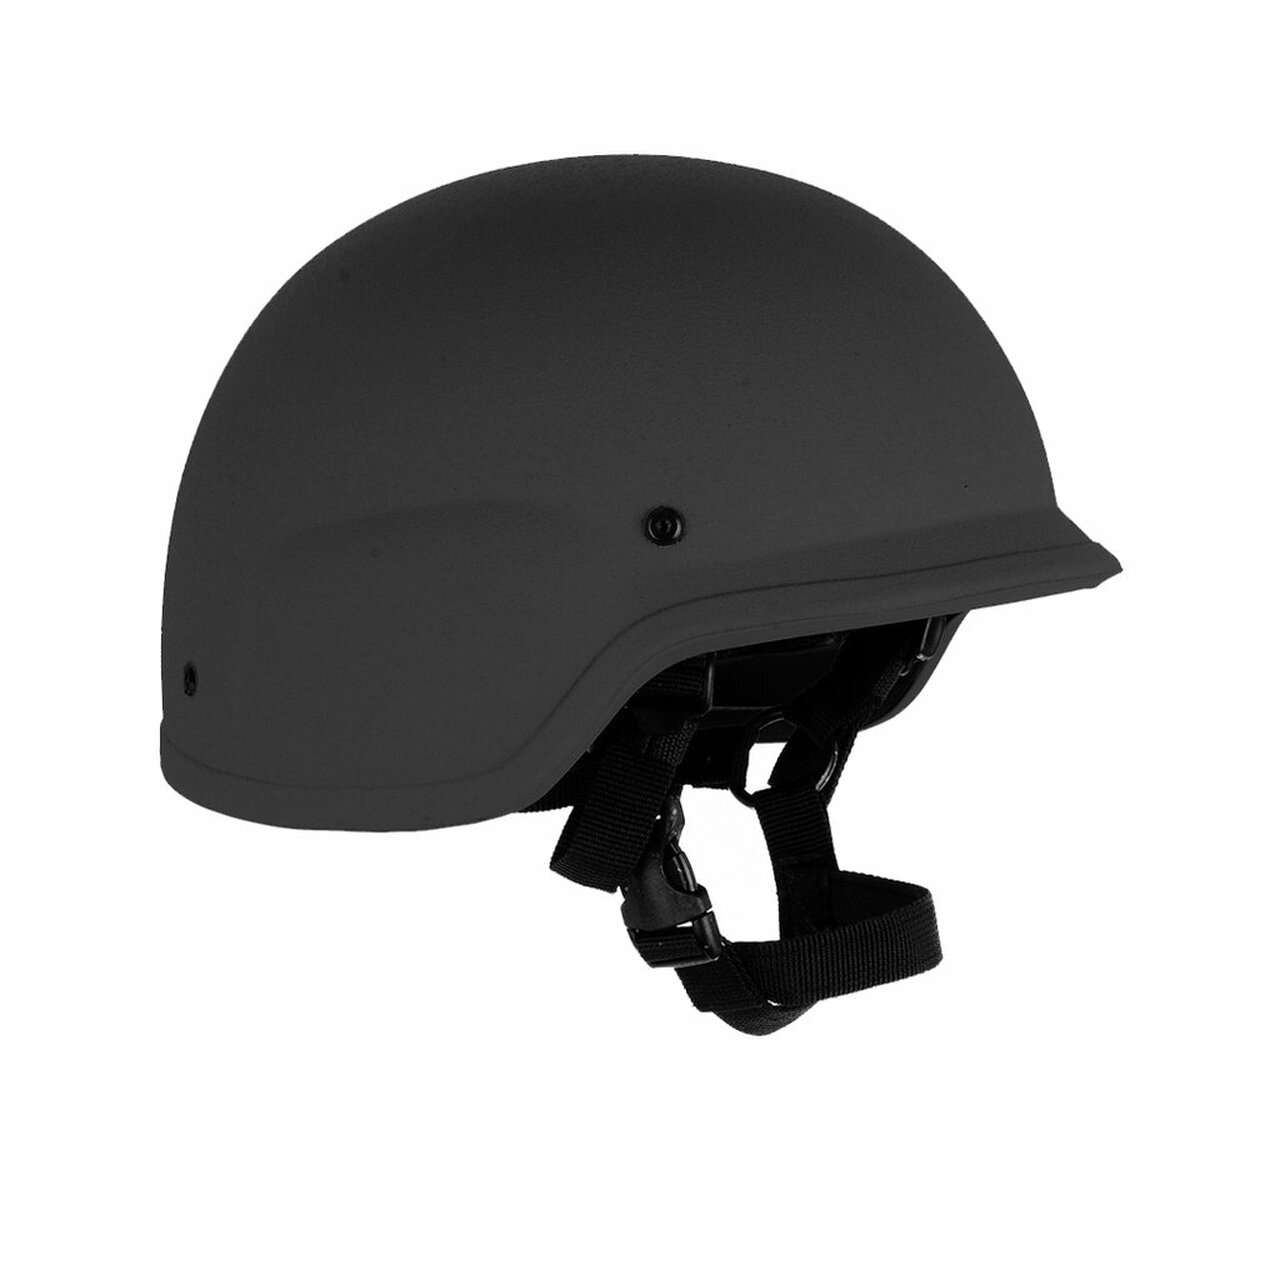 A Shellback Tactical Level IIIA PASGT Ballistic Helmet on a white background.